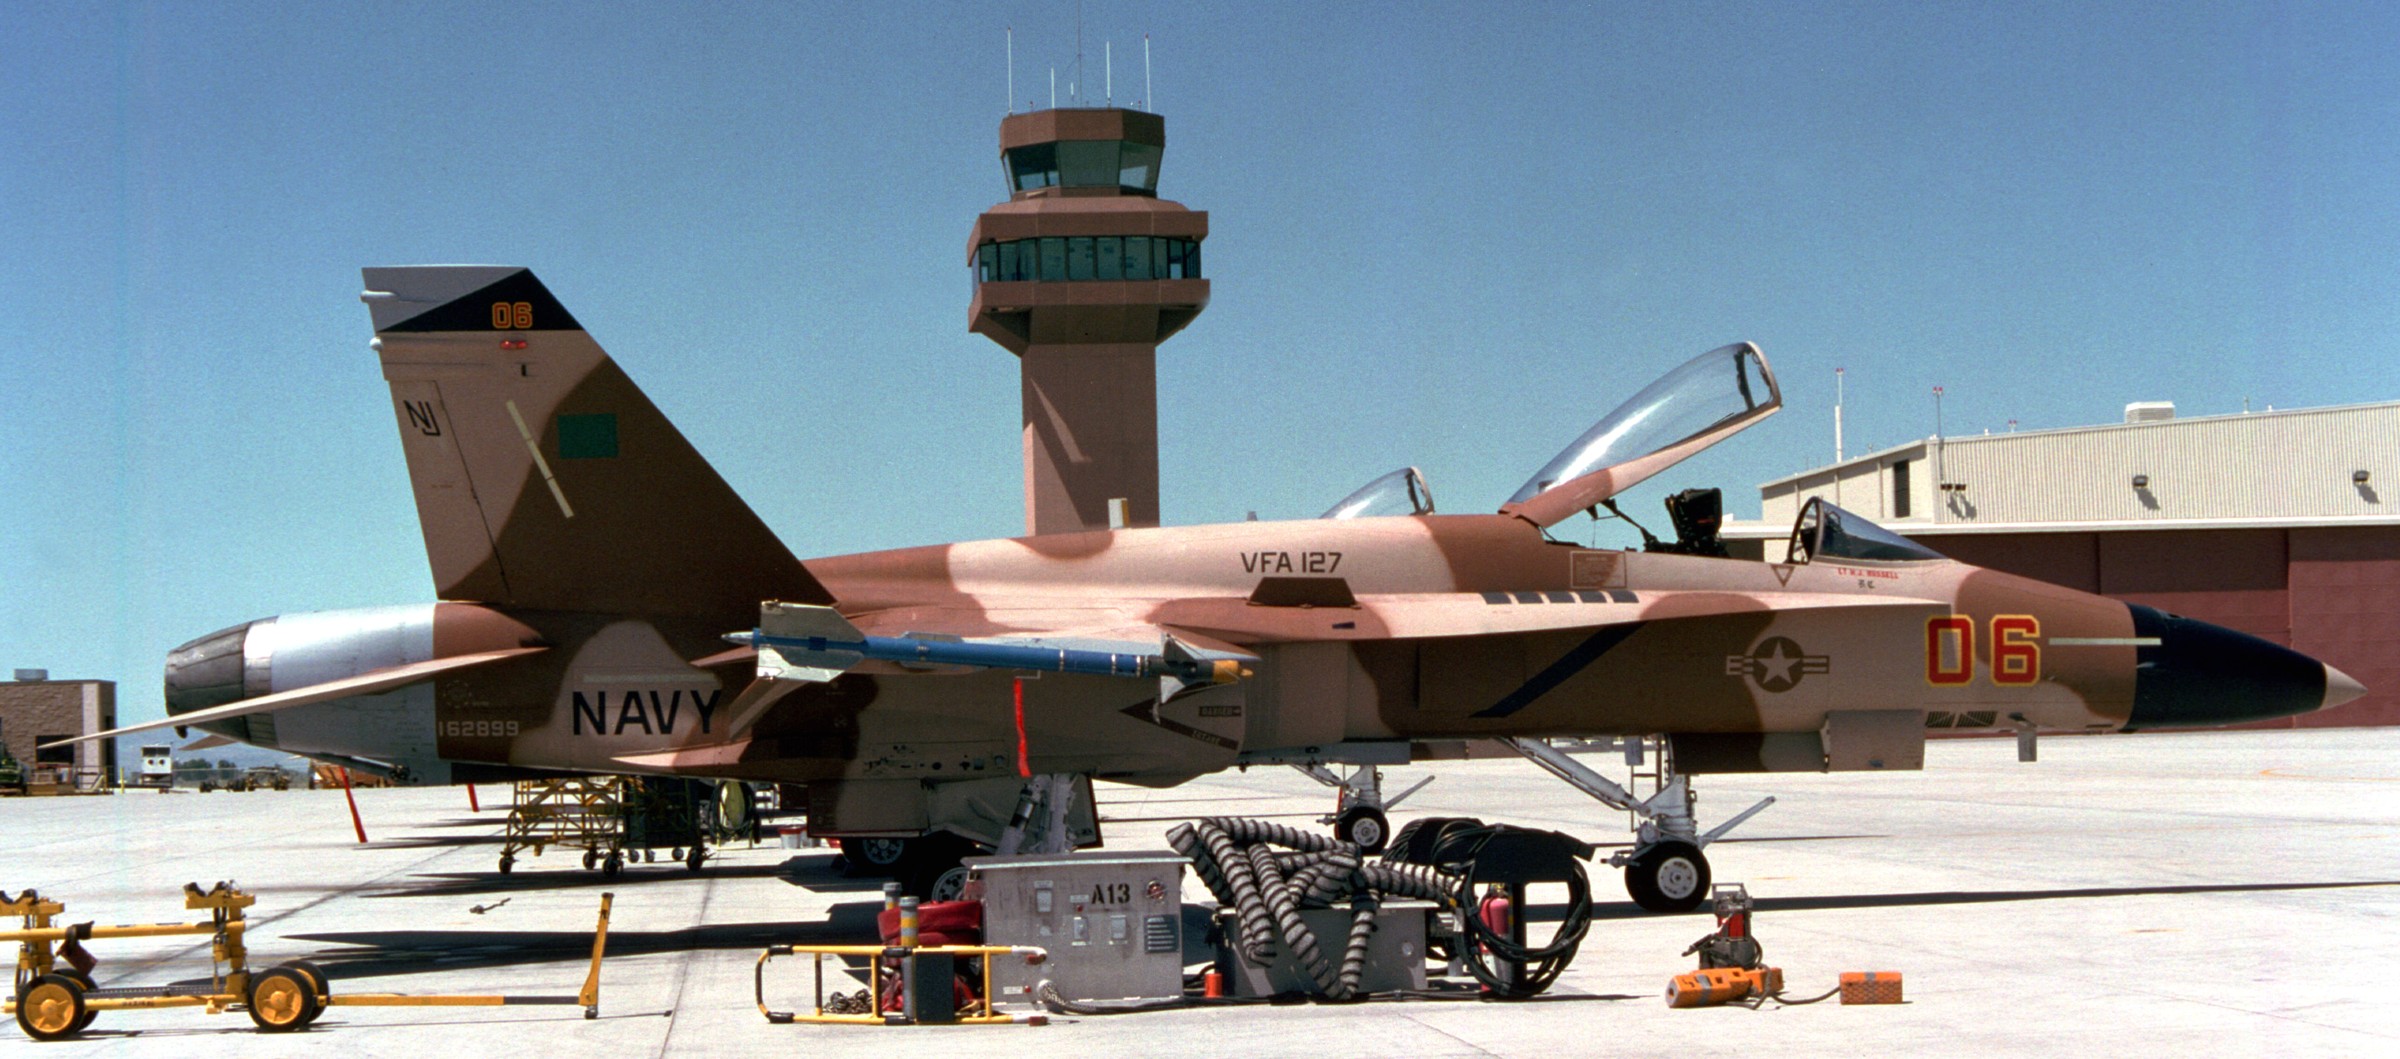 vfa-127 desert bogeys strike fighter squadron f/a-18a hornet 1993 17 nas fallon nevada